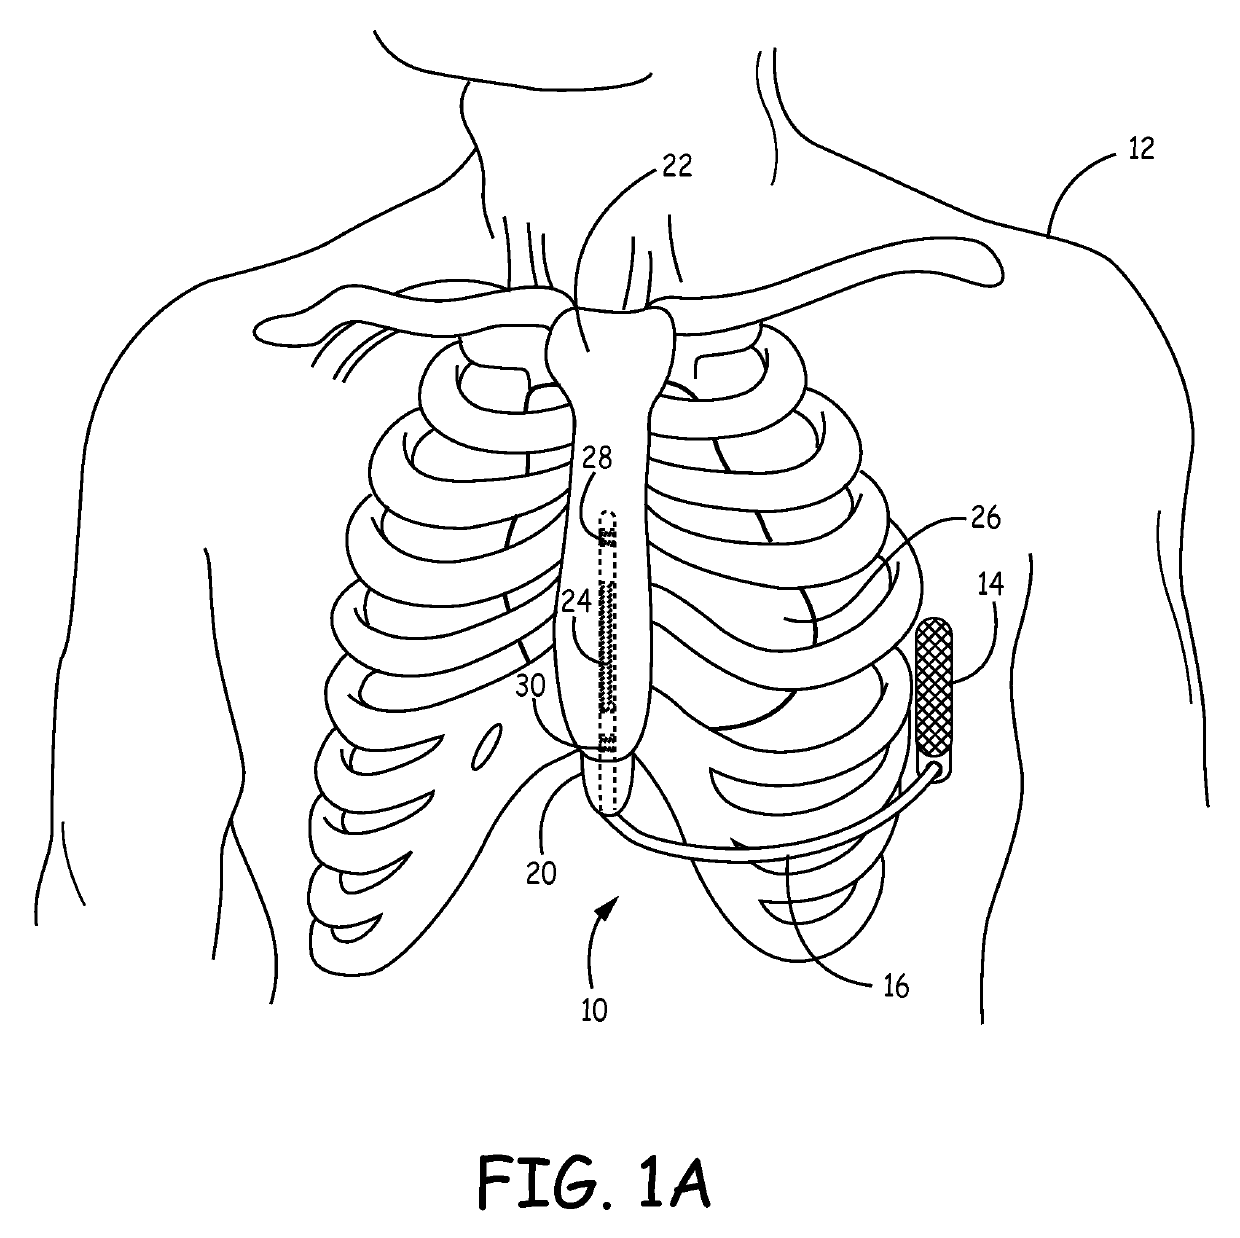 Implantable cardioverter-defibrillator (ICD) system including substernal lead